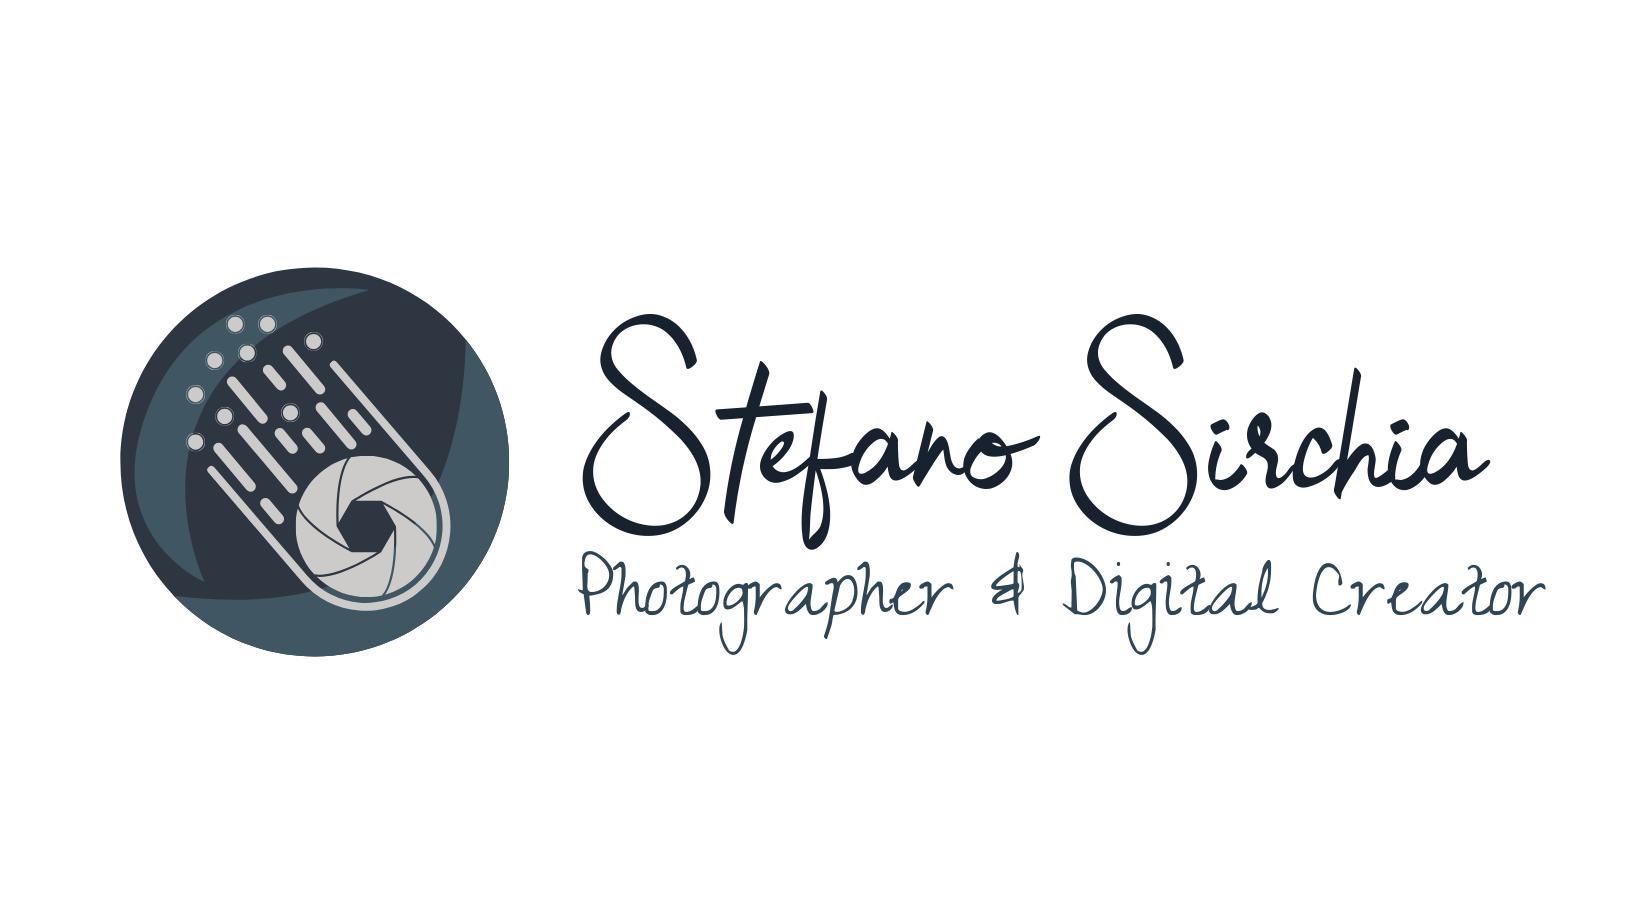 About Stefano Sirchia - Logo header